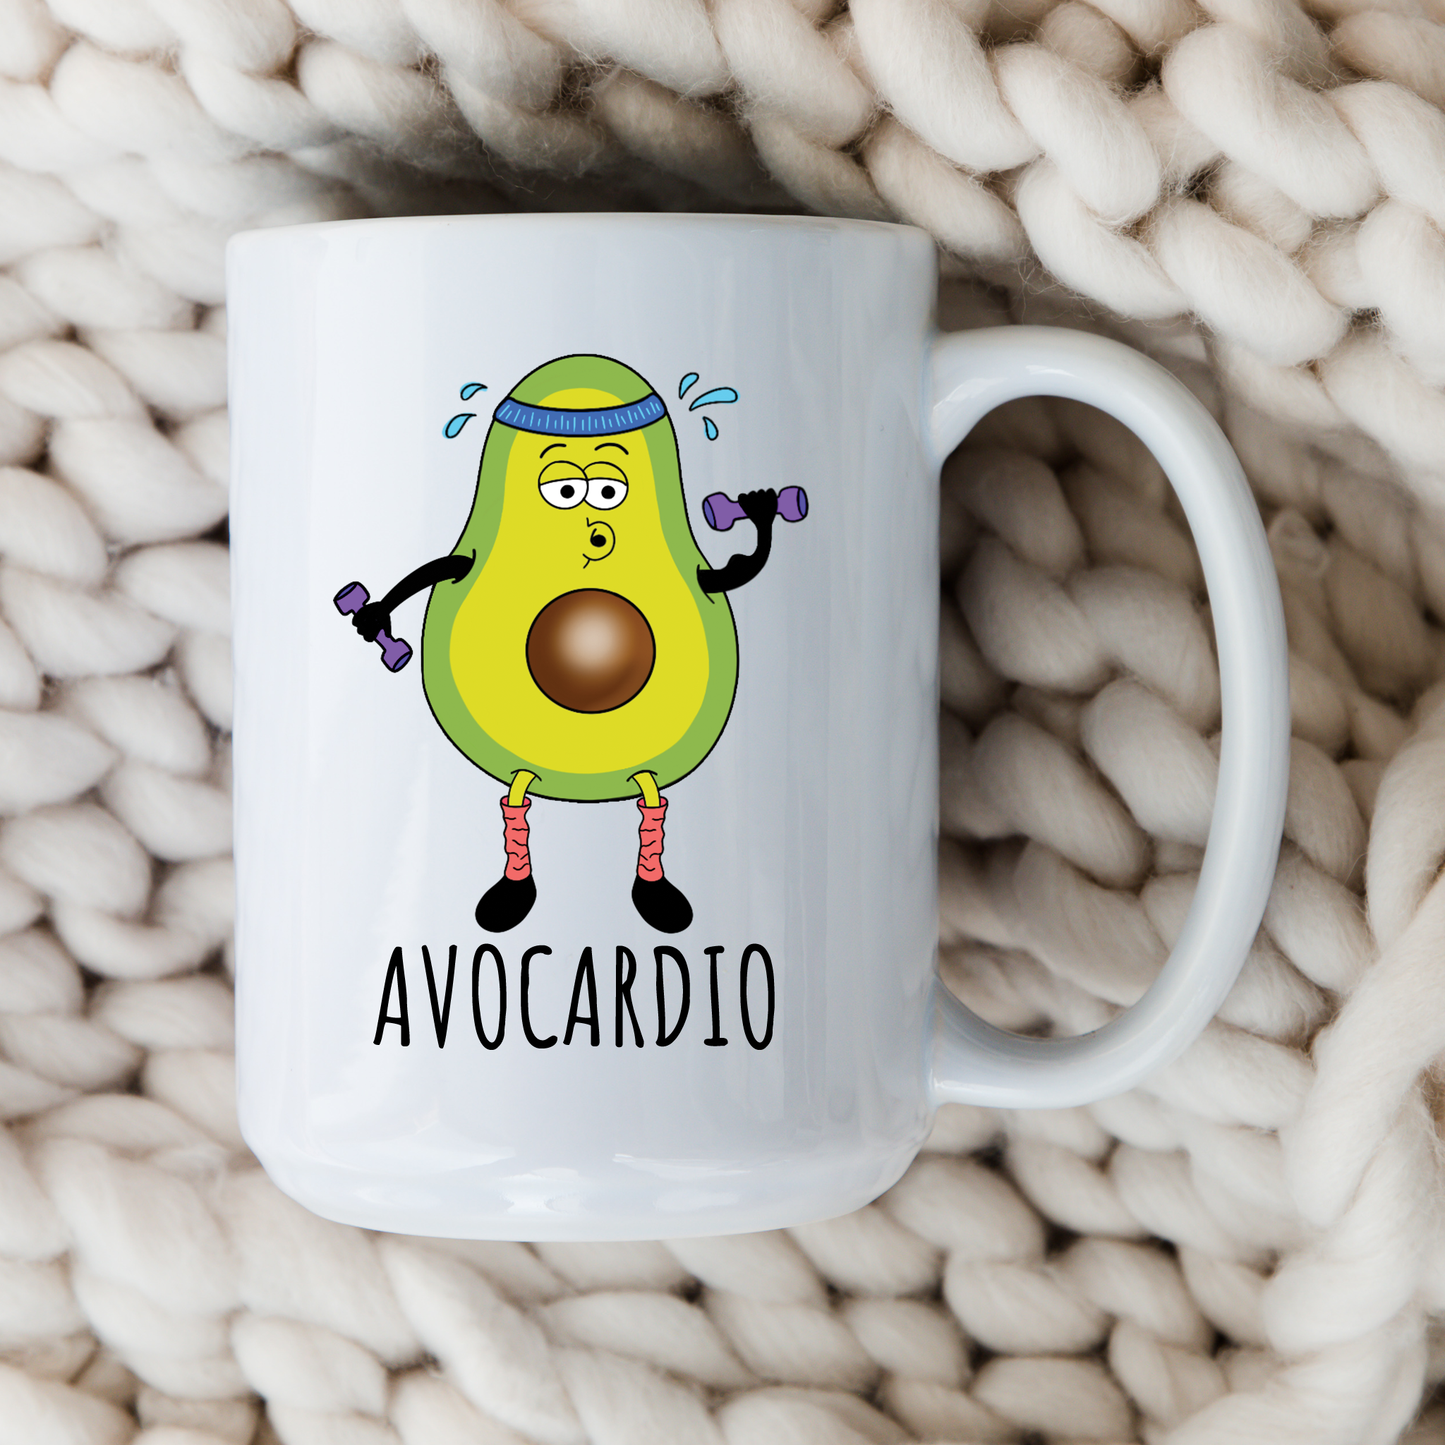 Avocardio Mug 90s Cartoon Coffee Cup